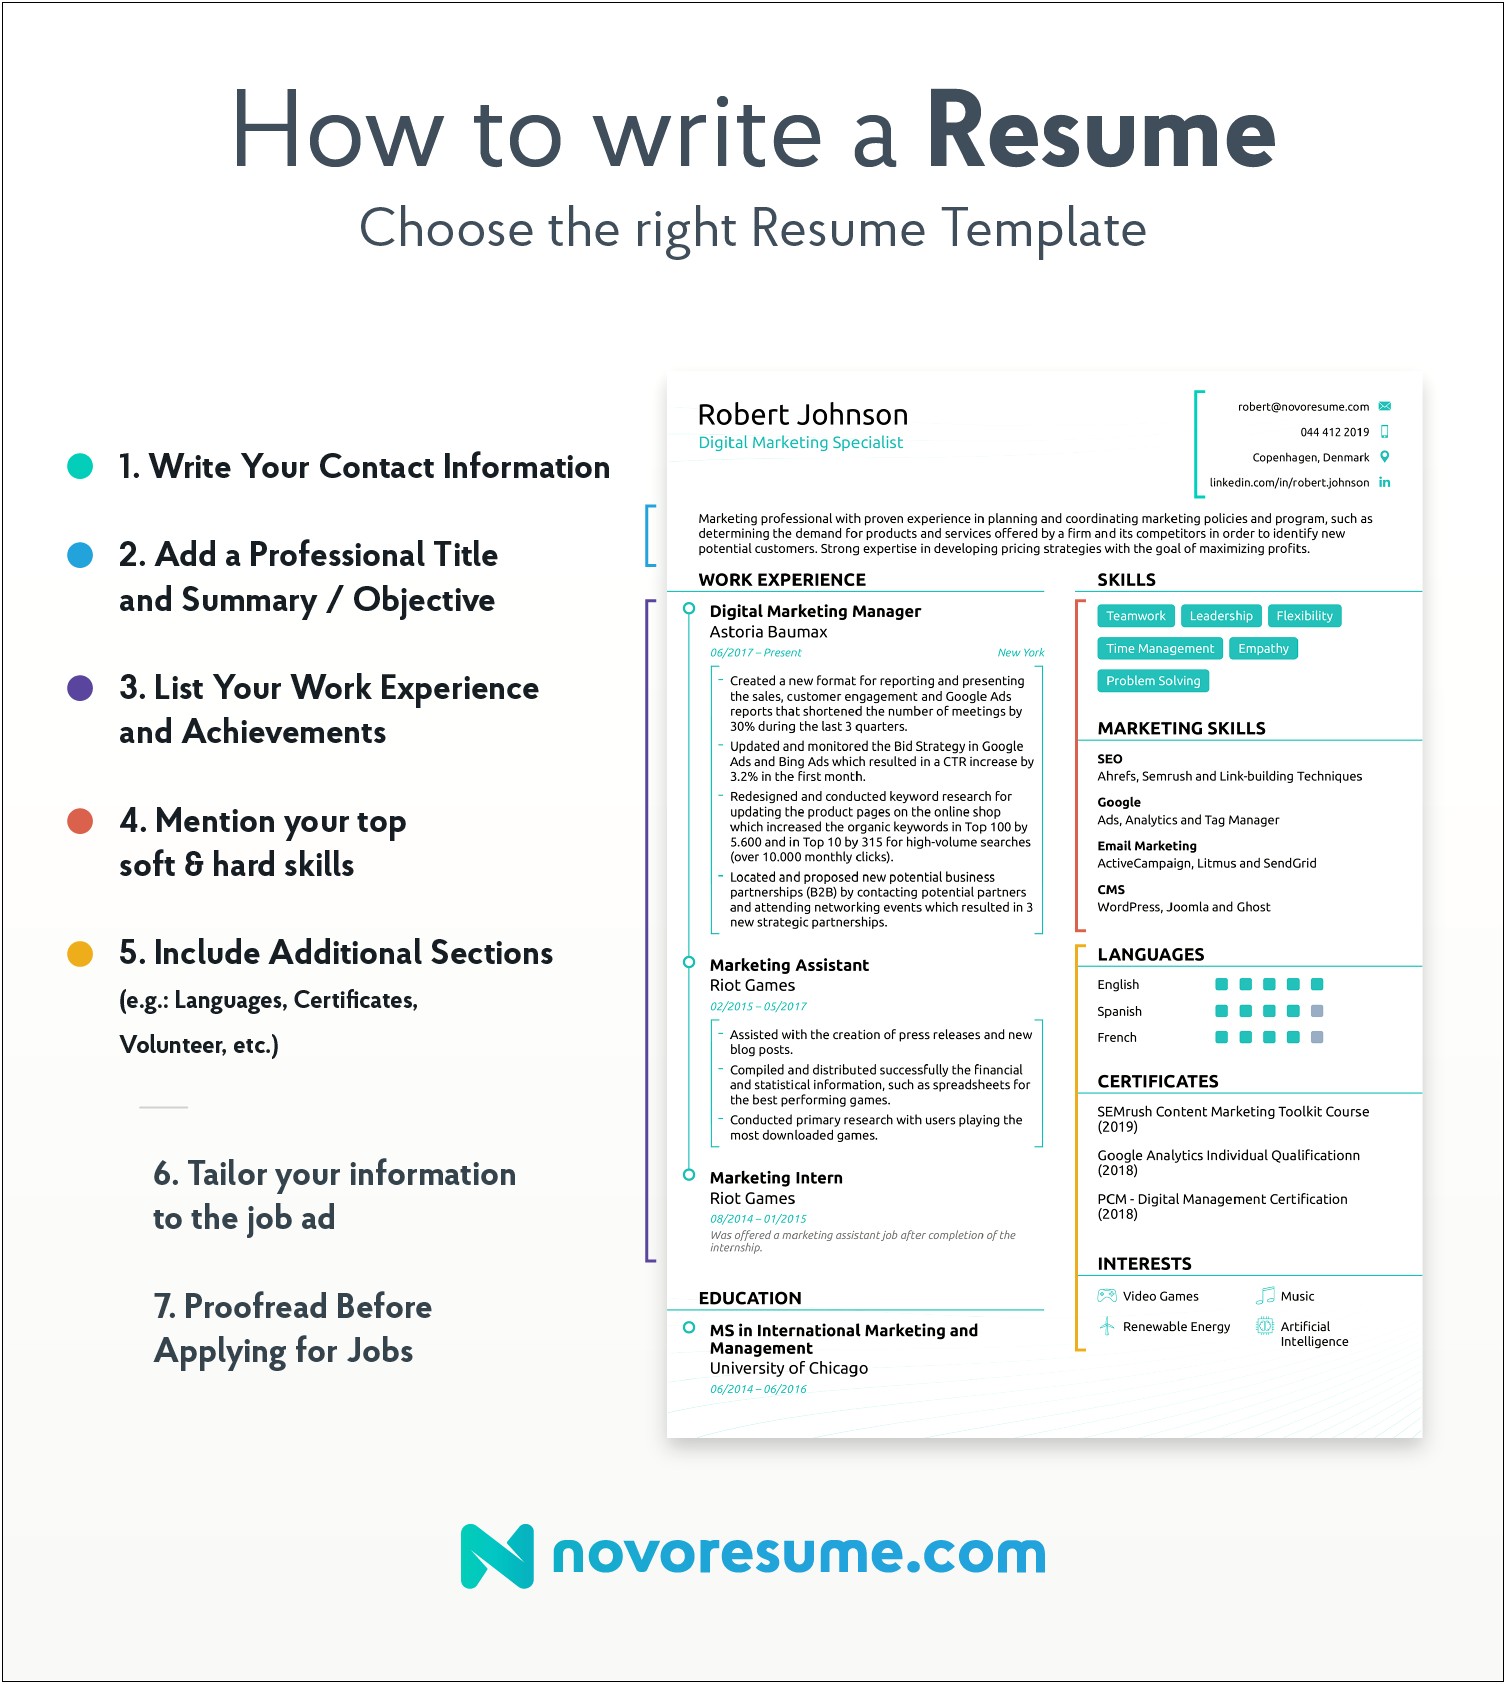 Marketing Resume List Jobs Without Marketing